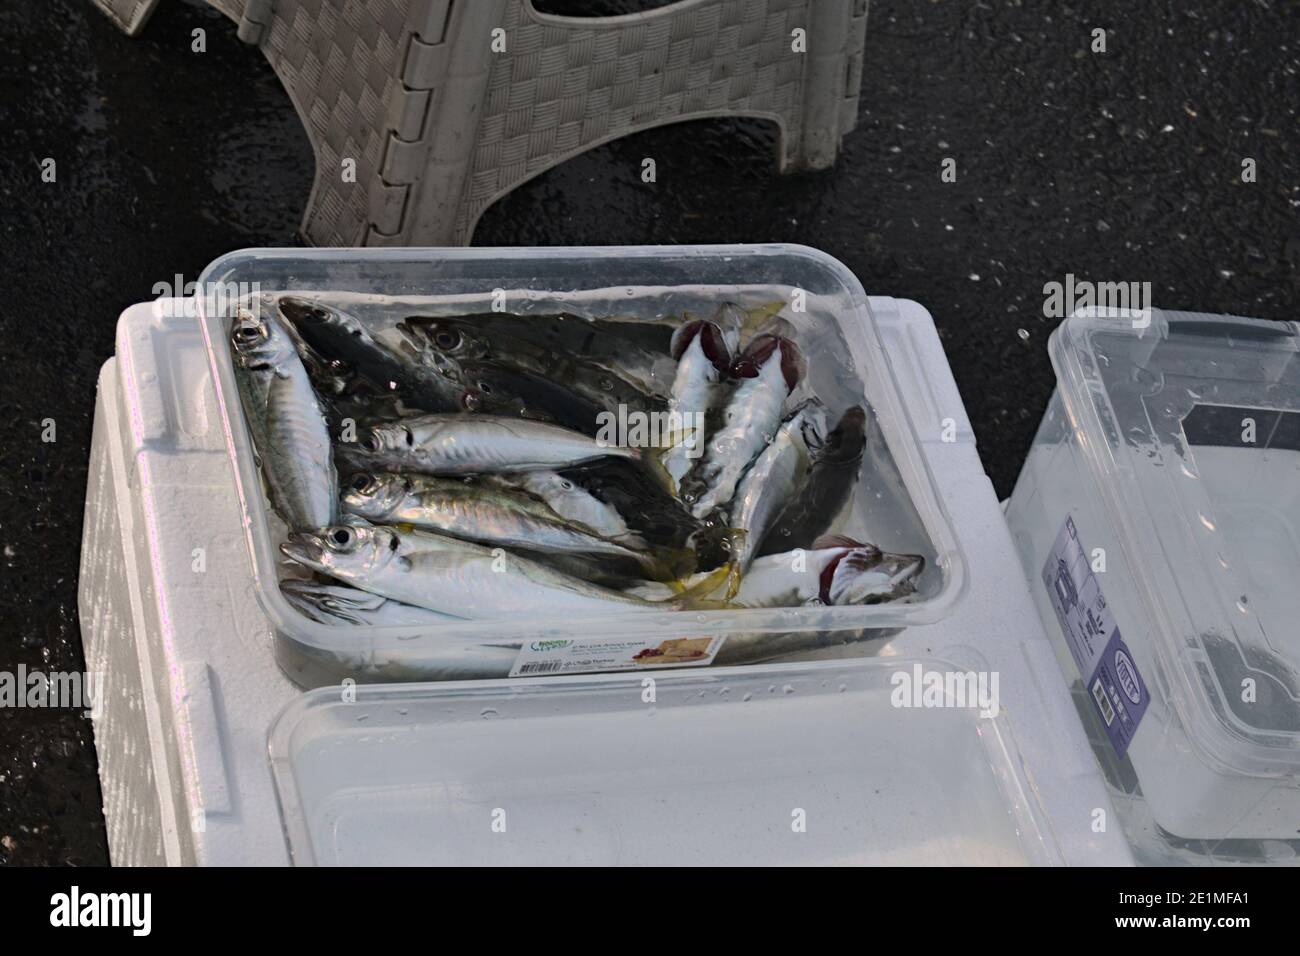 Fresh lake fish in a plastic bucket Stock Photo - Alamy, transparent bucket  of fish